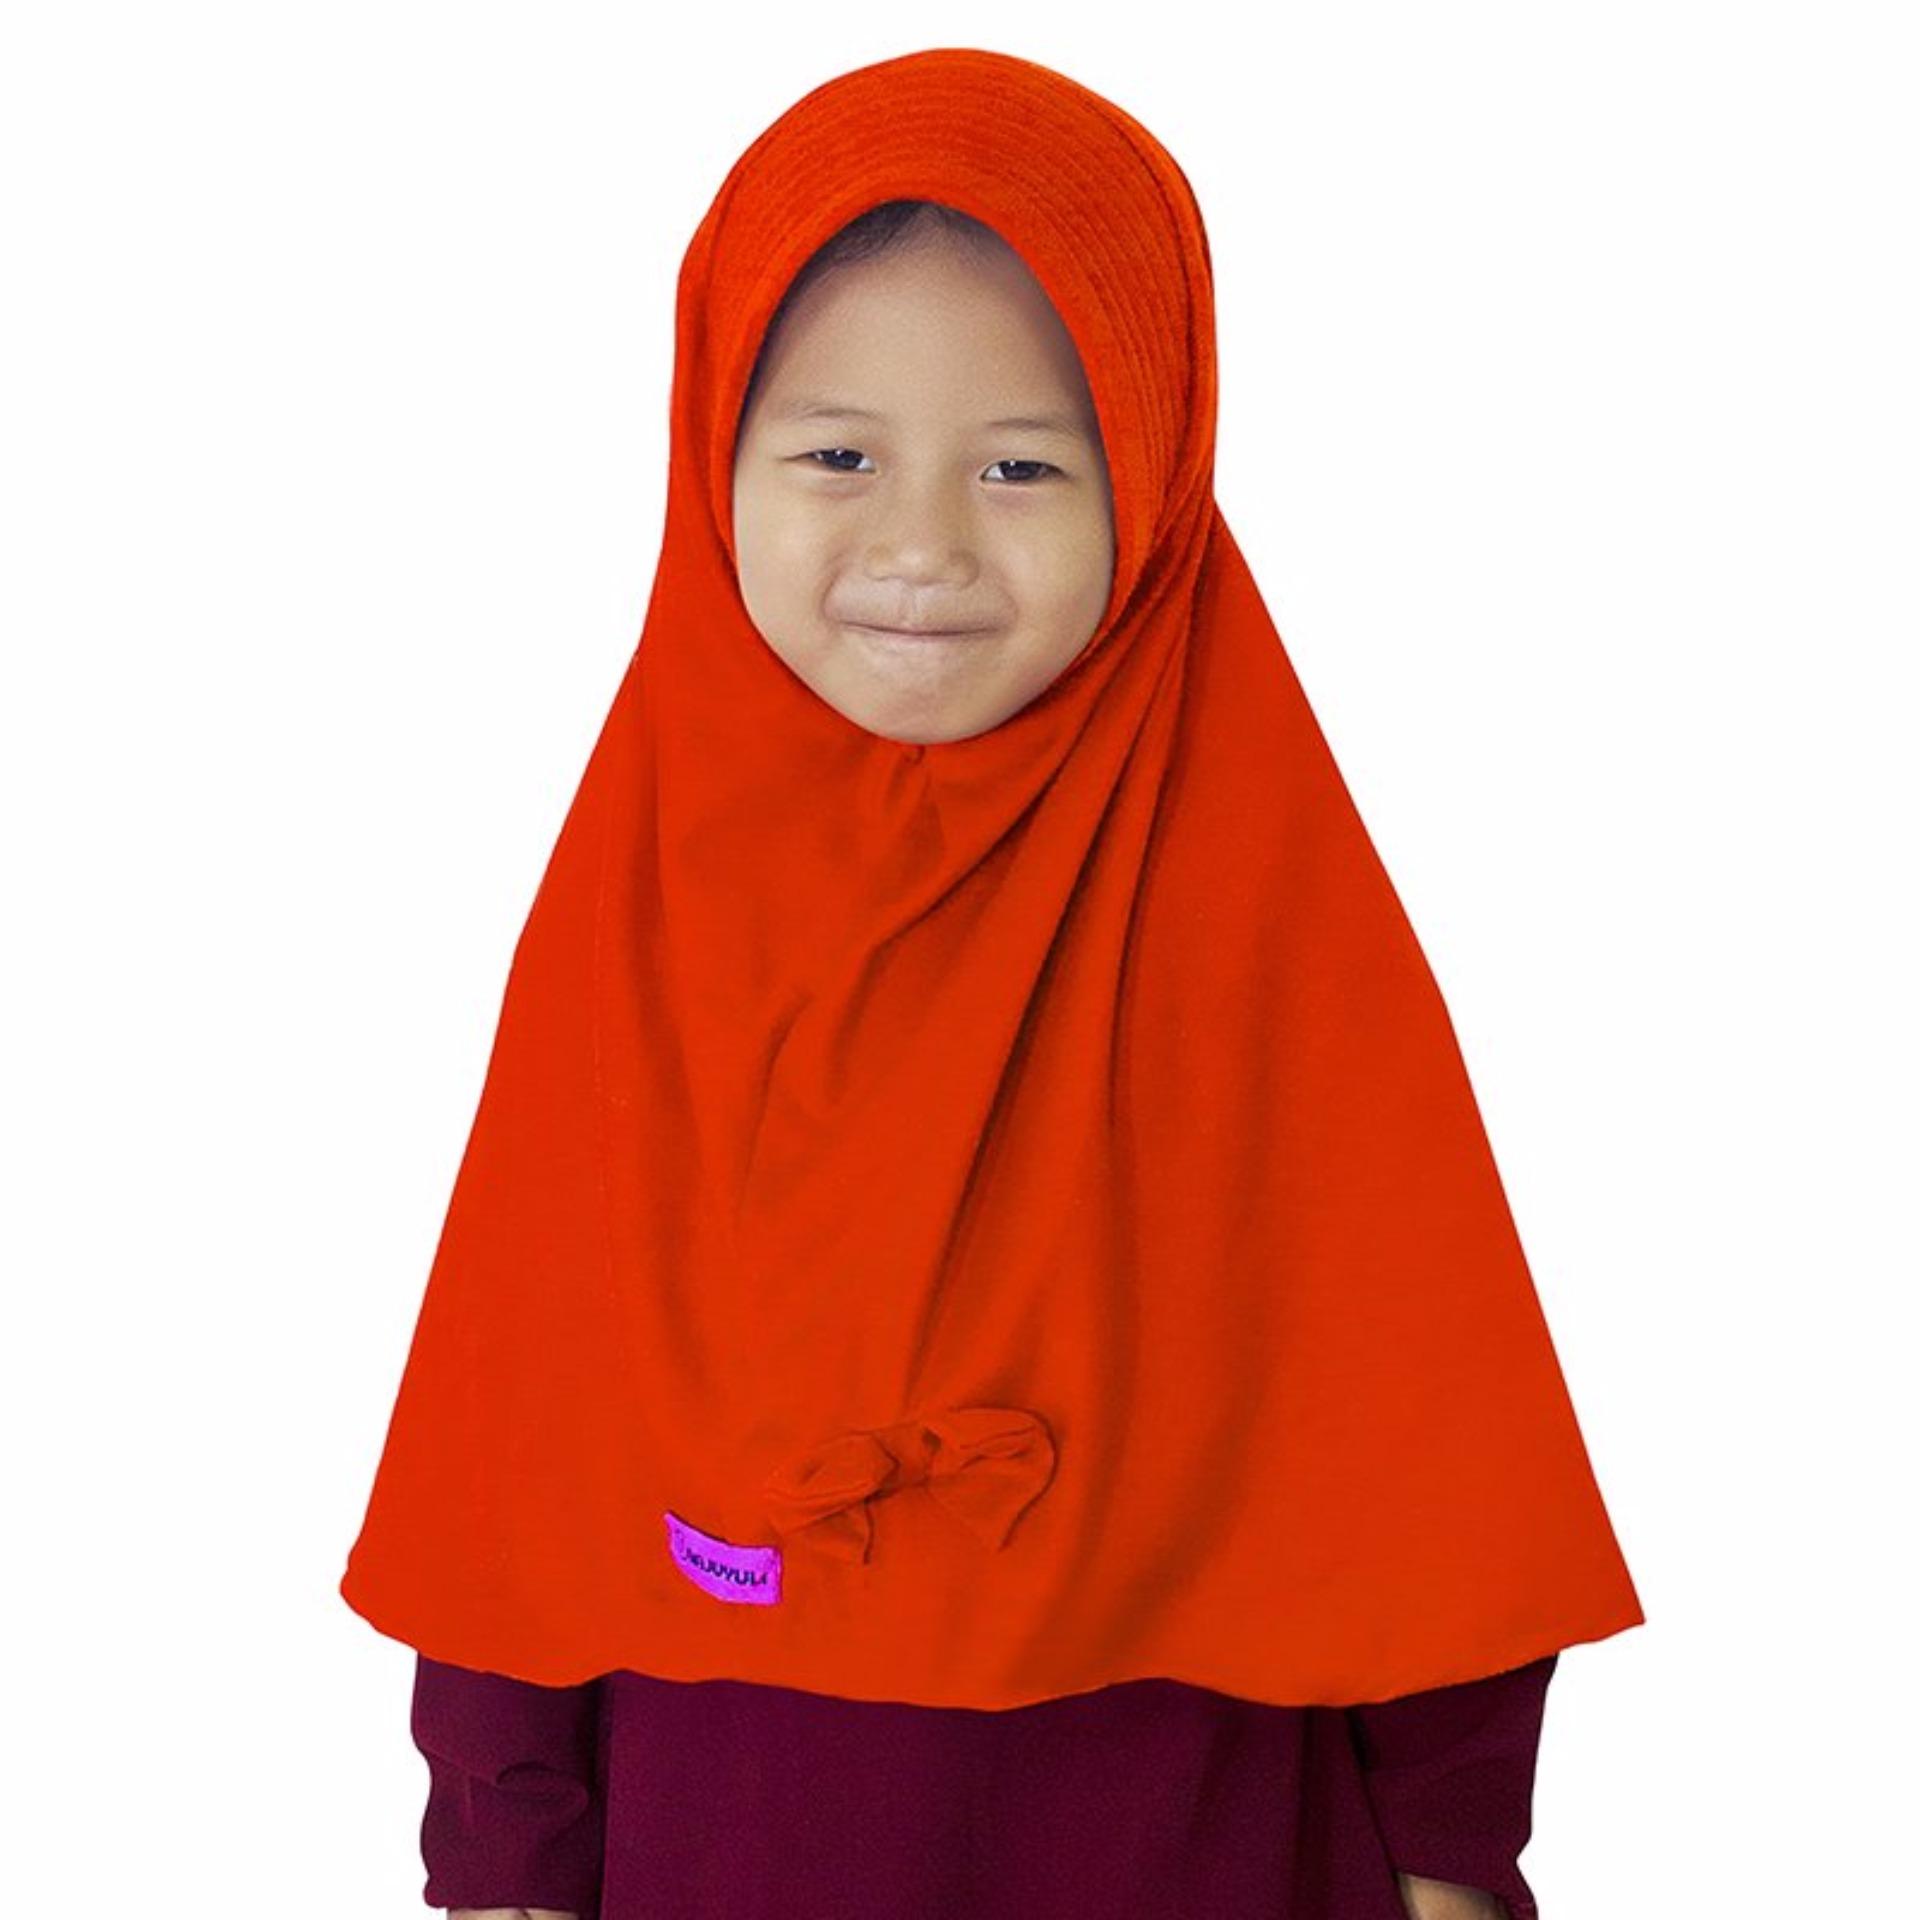 BELI SEKARANG Jilbab 2 Warna Fashion Muslim Terbaru Wanita